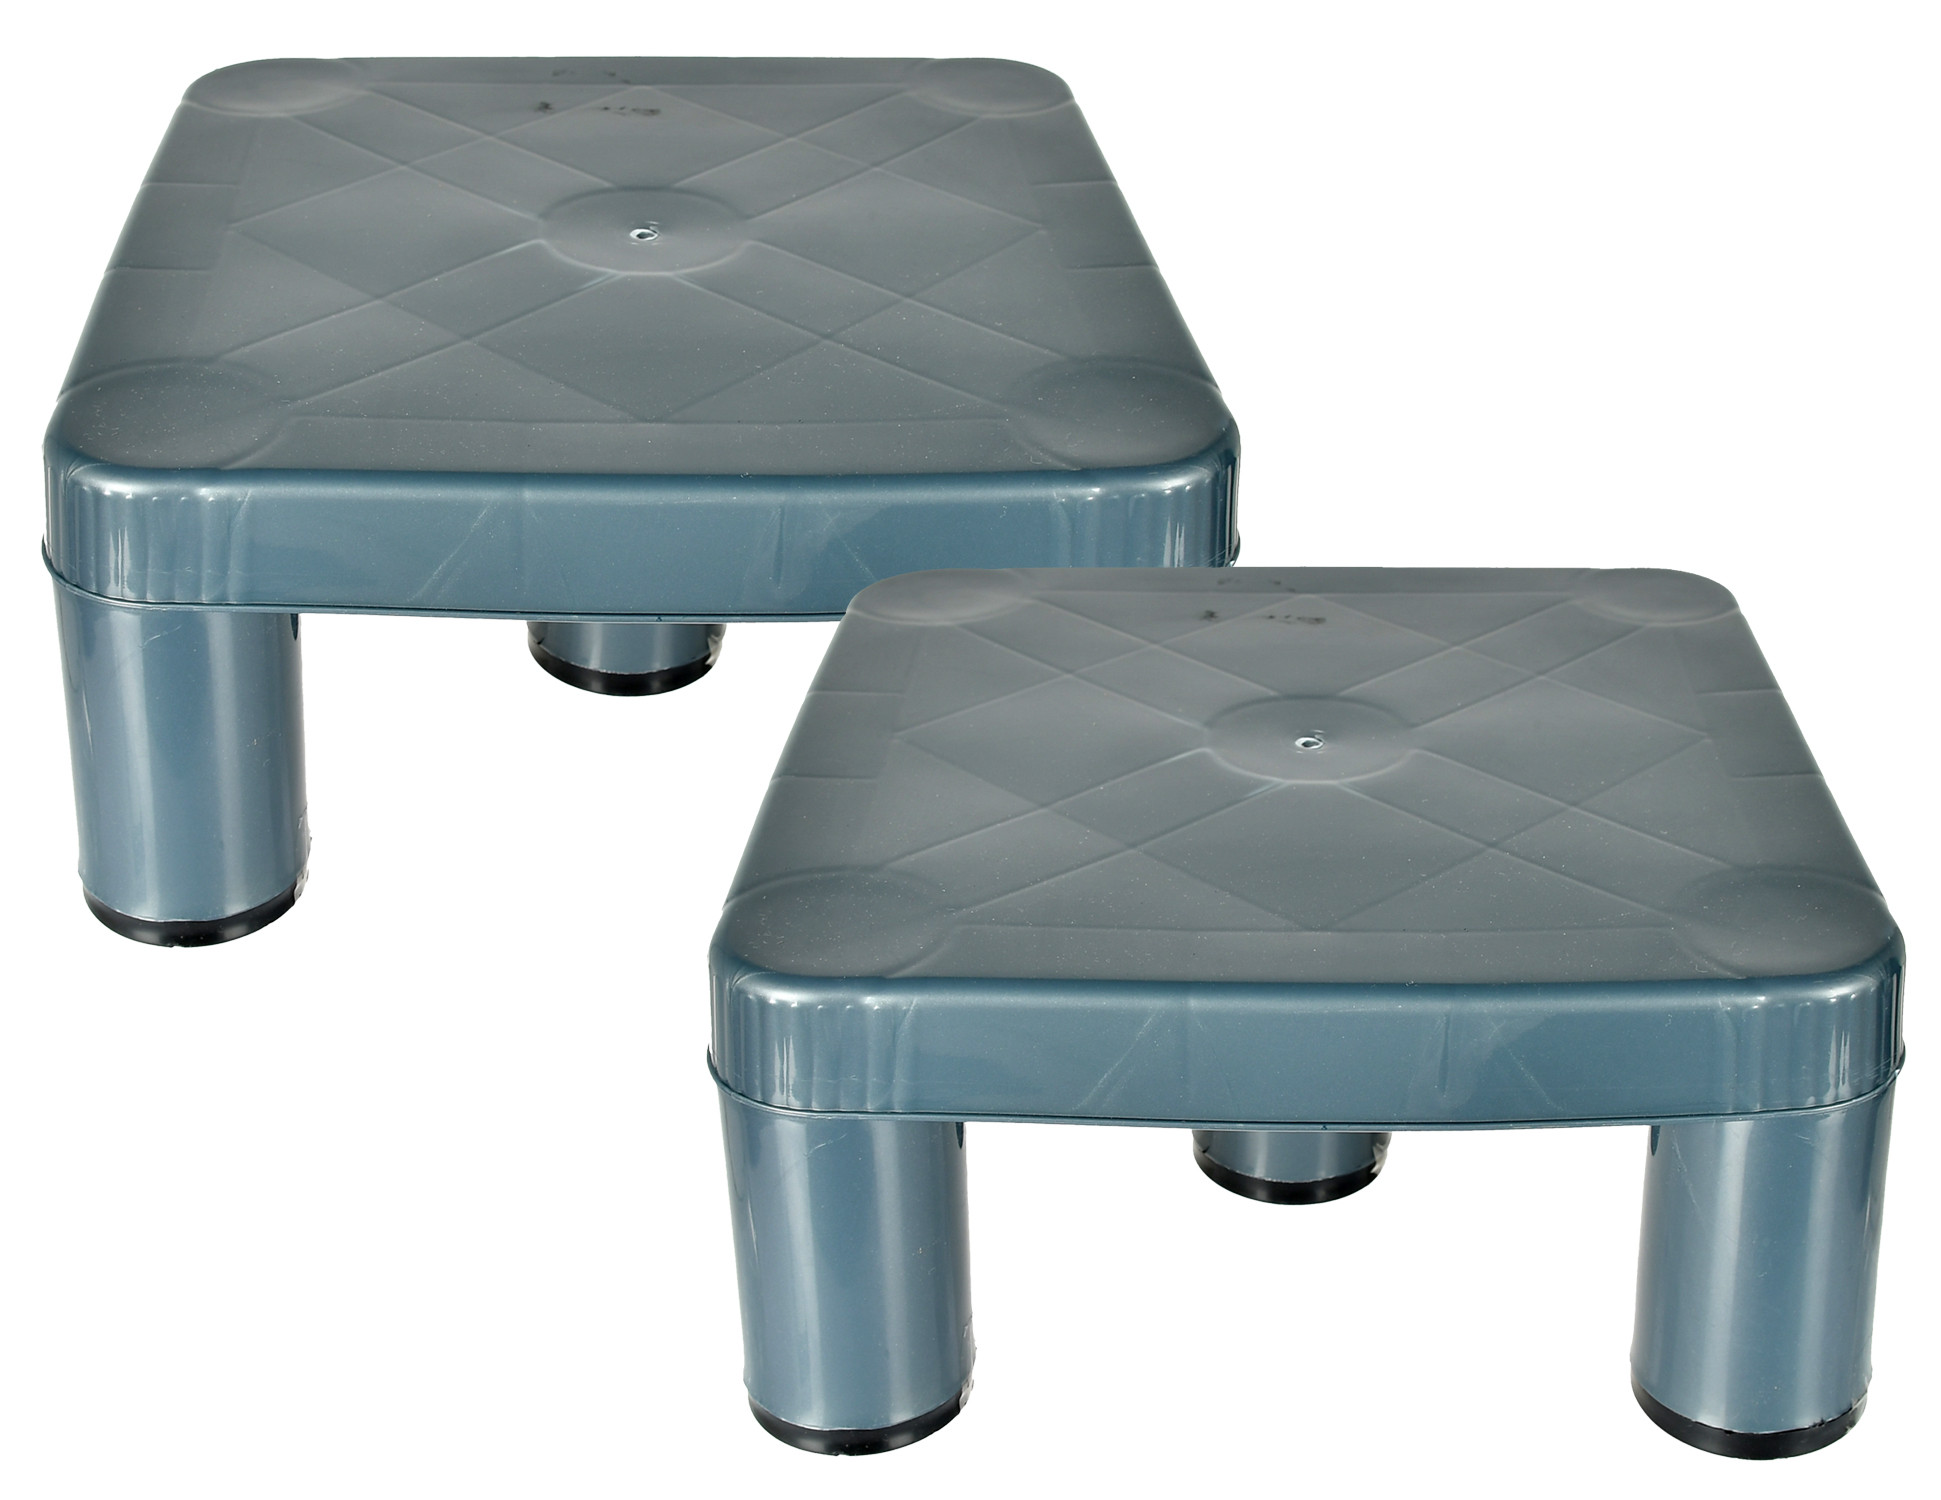 Kuber Industries Small Multipurposes Square Plastic Seating Stool/Patla (Grey)